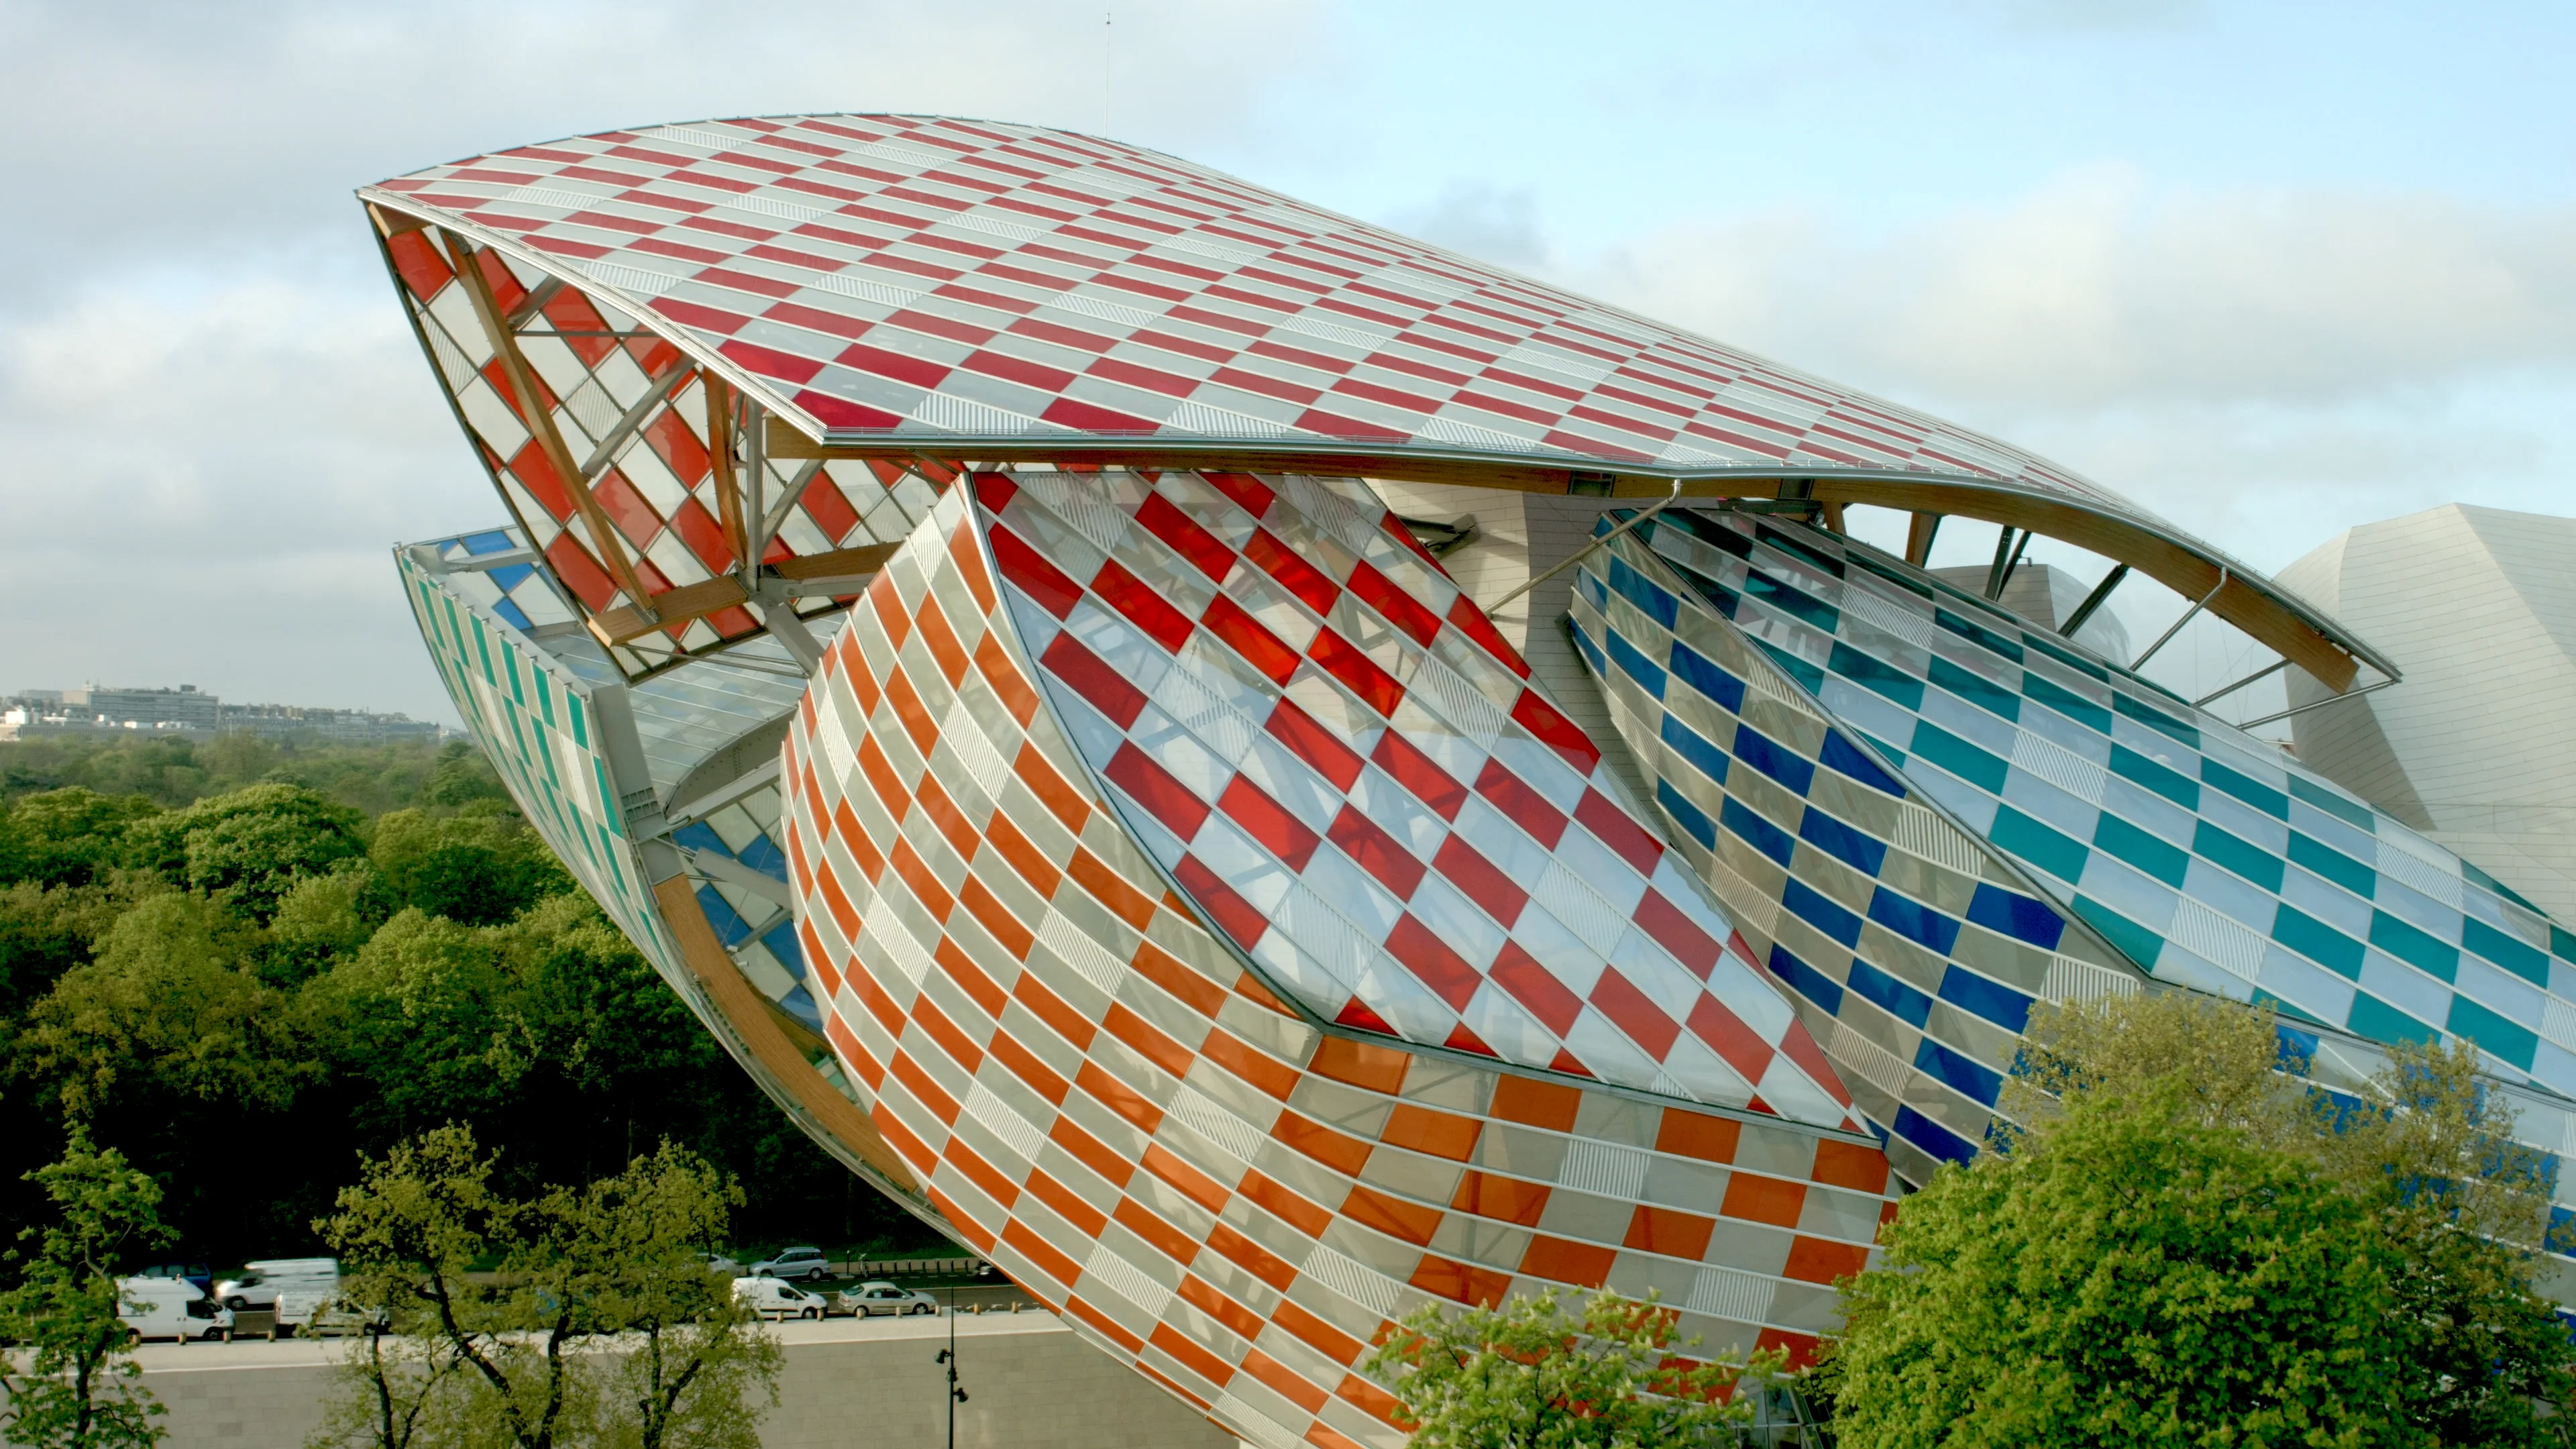 A closer look at Daniel Buren's colorful intervention at the Fondation Louis  Vuitton